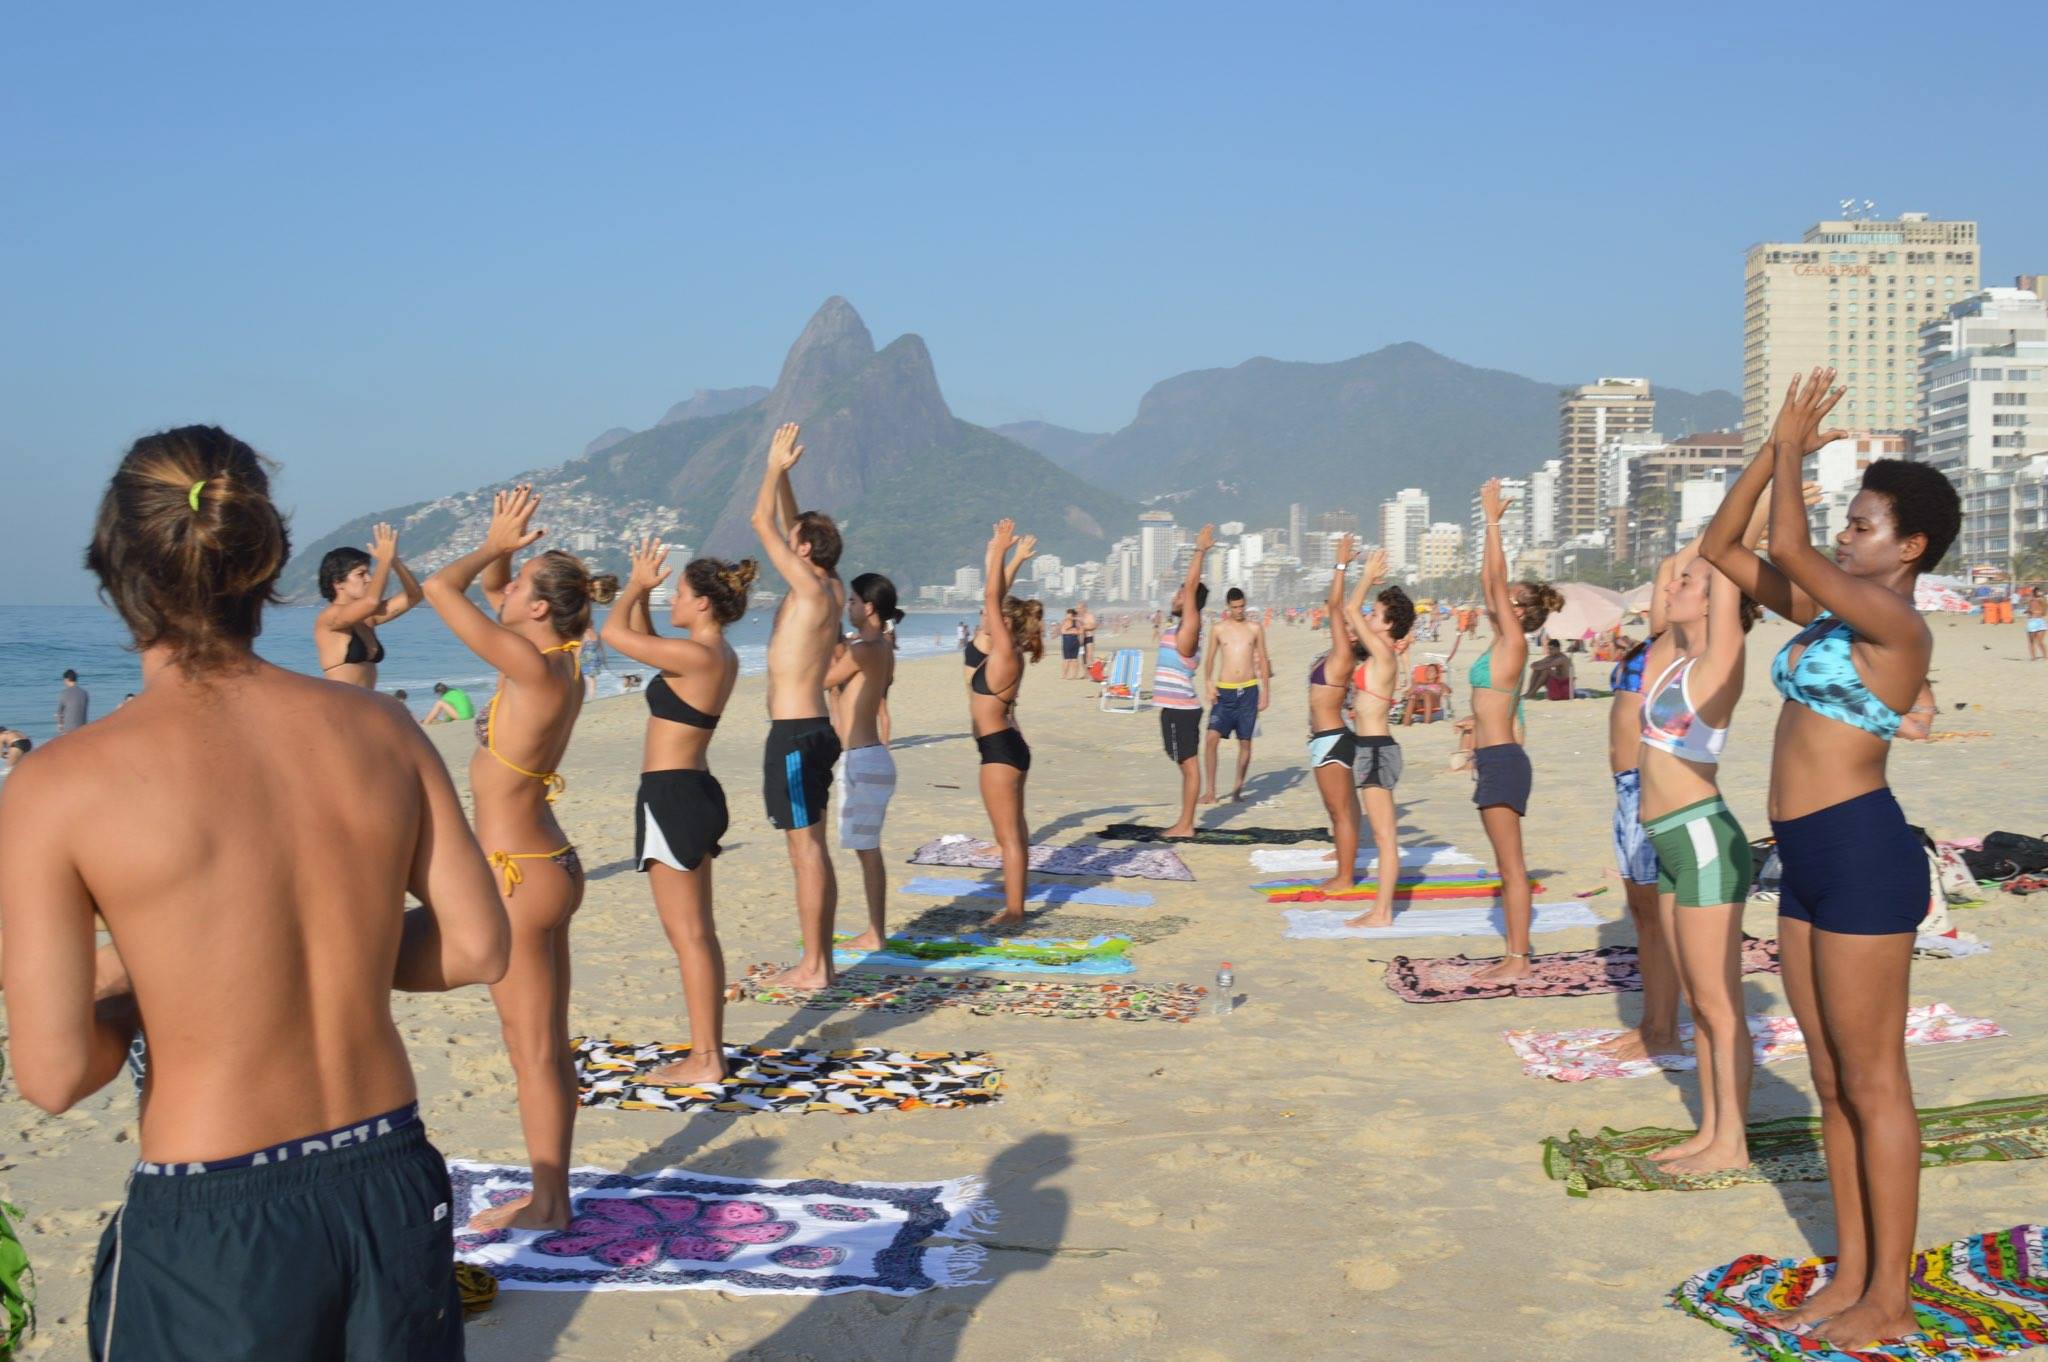 Brazil, Brazil News, Rio, Rio de Janeiro, Yoga, Outdoor Yoga, Yoga Retreats, Beach, Blyss Yoga, Espaco Akasha, Yoga Surf School, Kelly Slater, Barra de Tijuca, Ipanema, Humaita